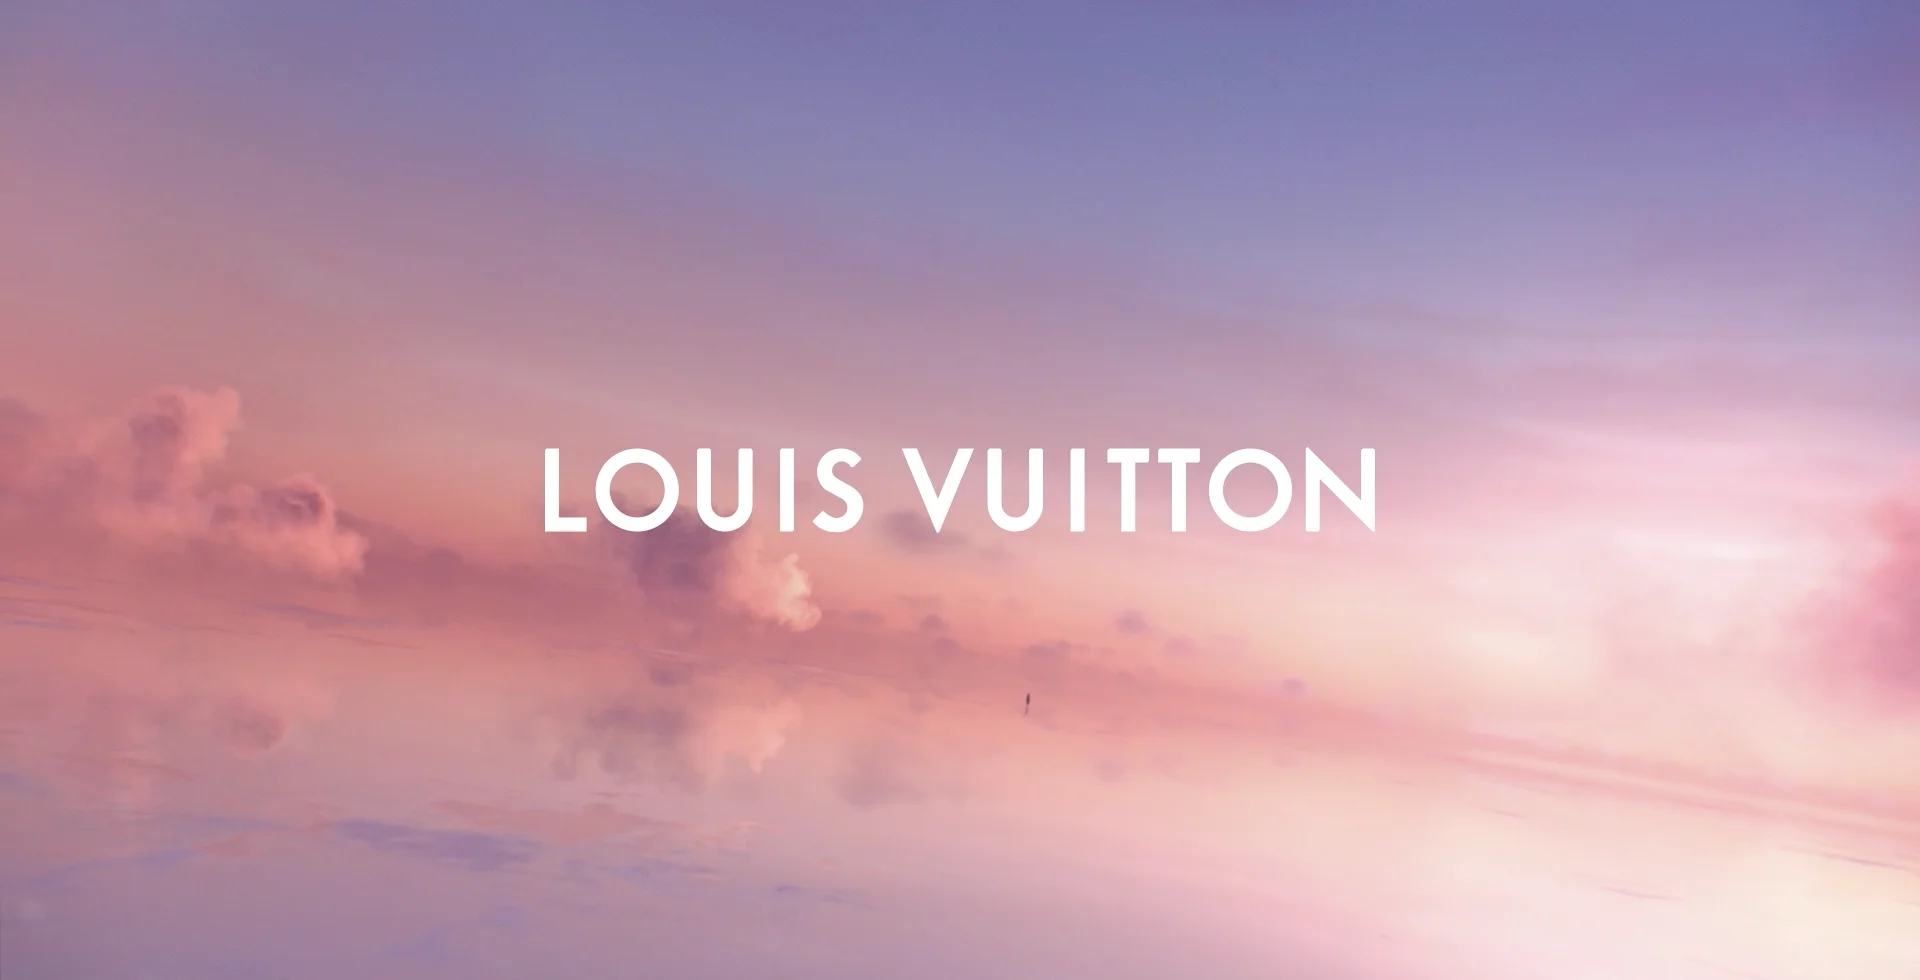 ATTRAPE-RÊVES by Louis Vuitton on Behance